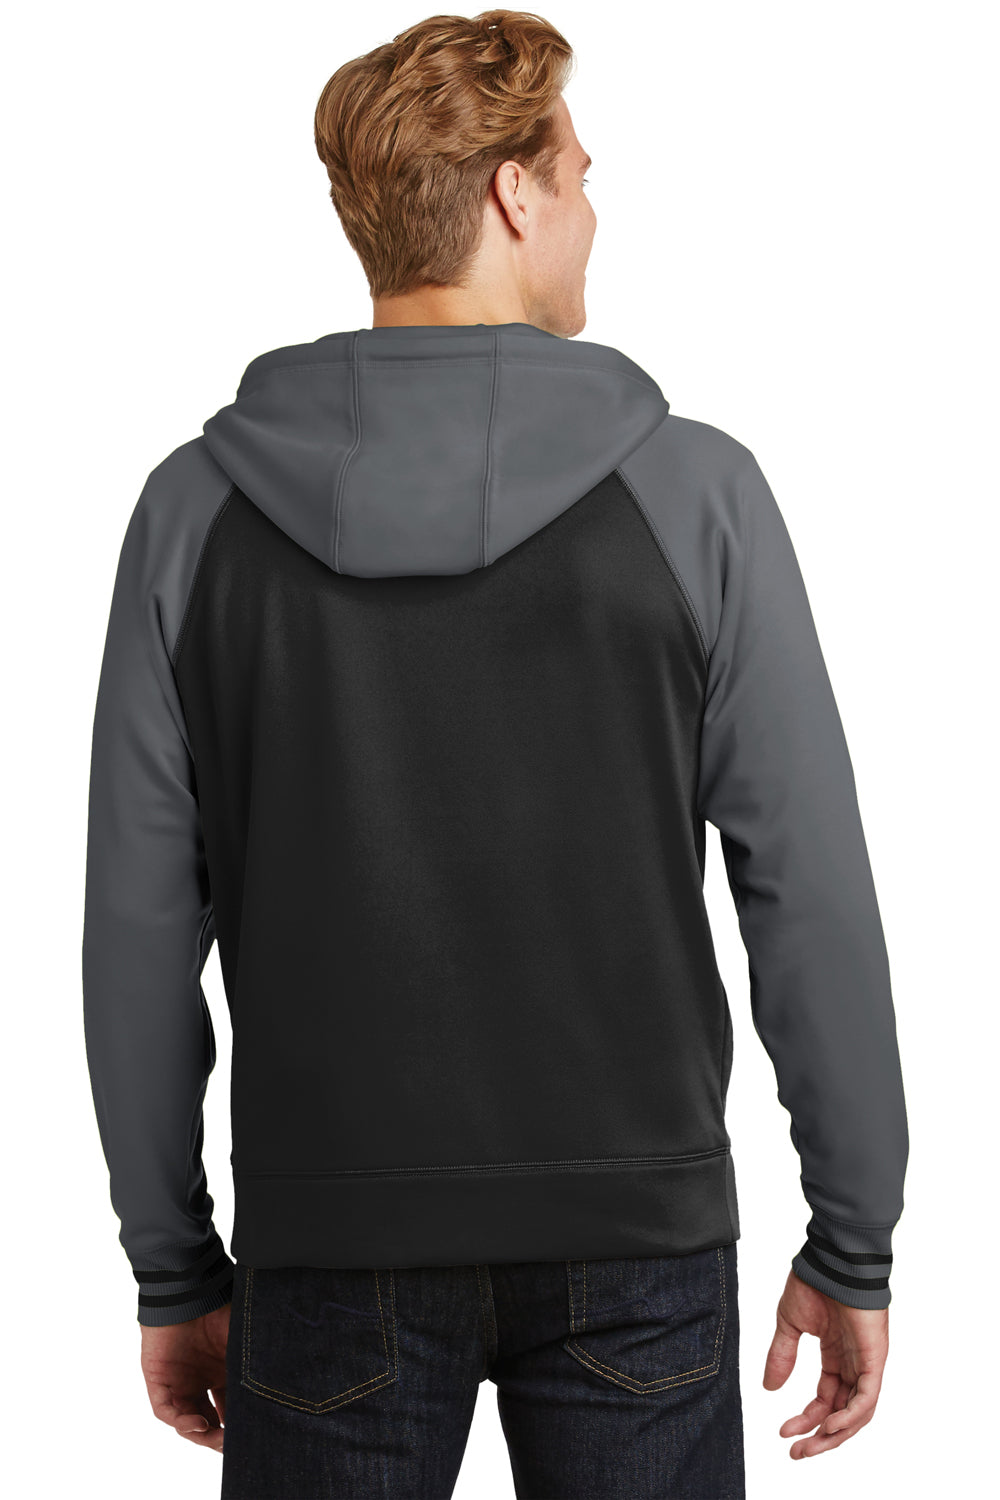 Sport-Tek ST236 Mens Sport-Wick Moisture Wicking Fleece Hooded Sweatshirt Hoodie Black/Grey Back